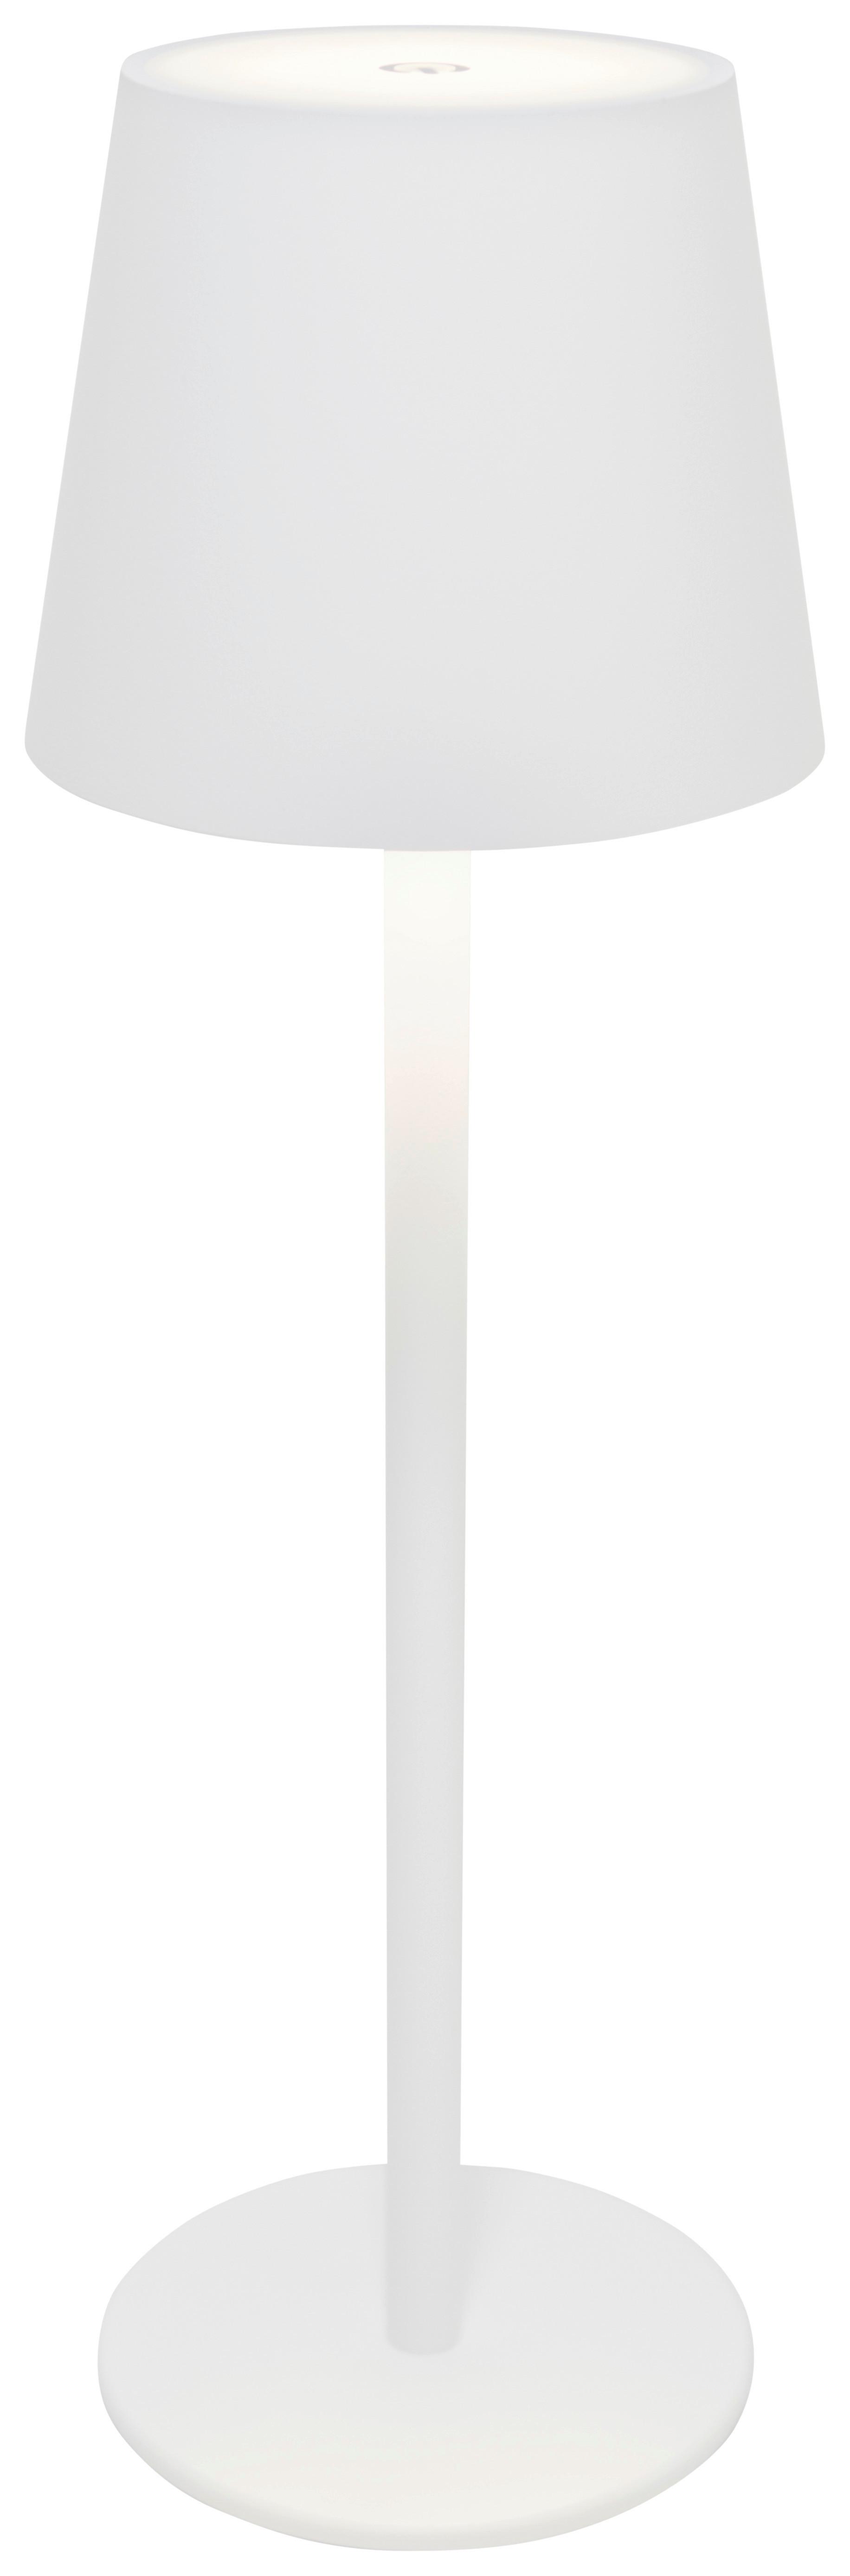 Namizna Led-svetilka Noemi - bela, Konvencionalno, kovina/umetna masa (11,5/36cm) - Modern Living